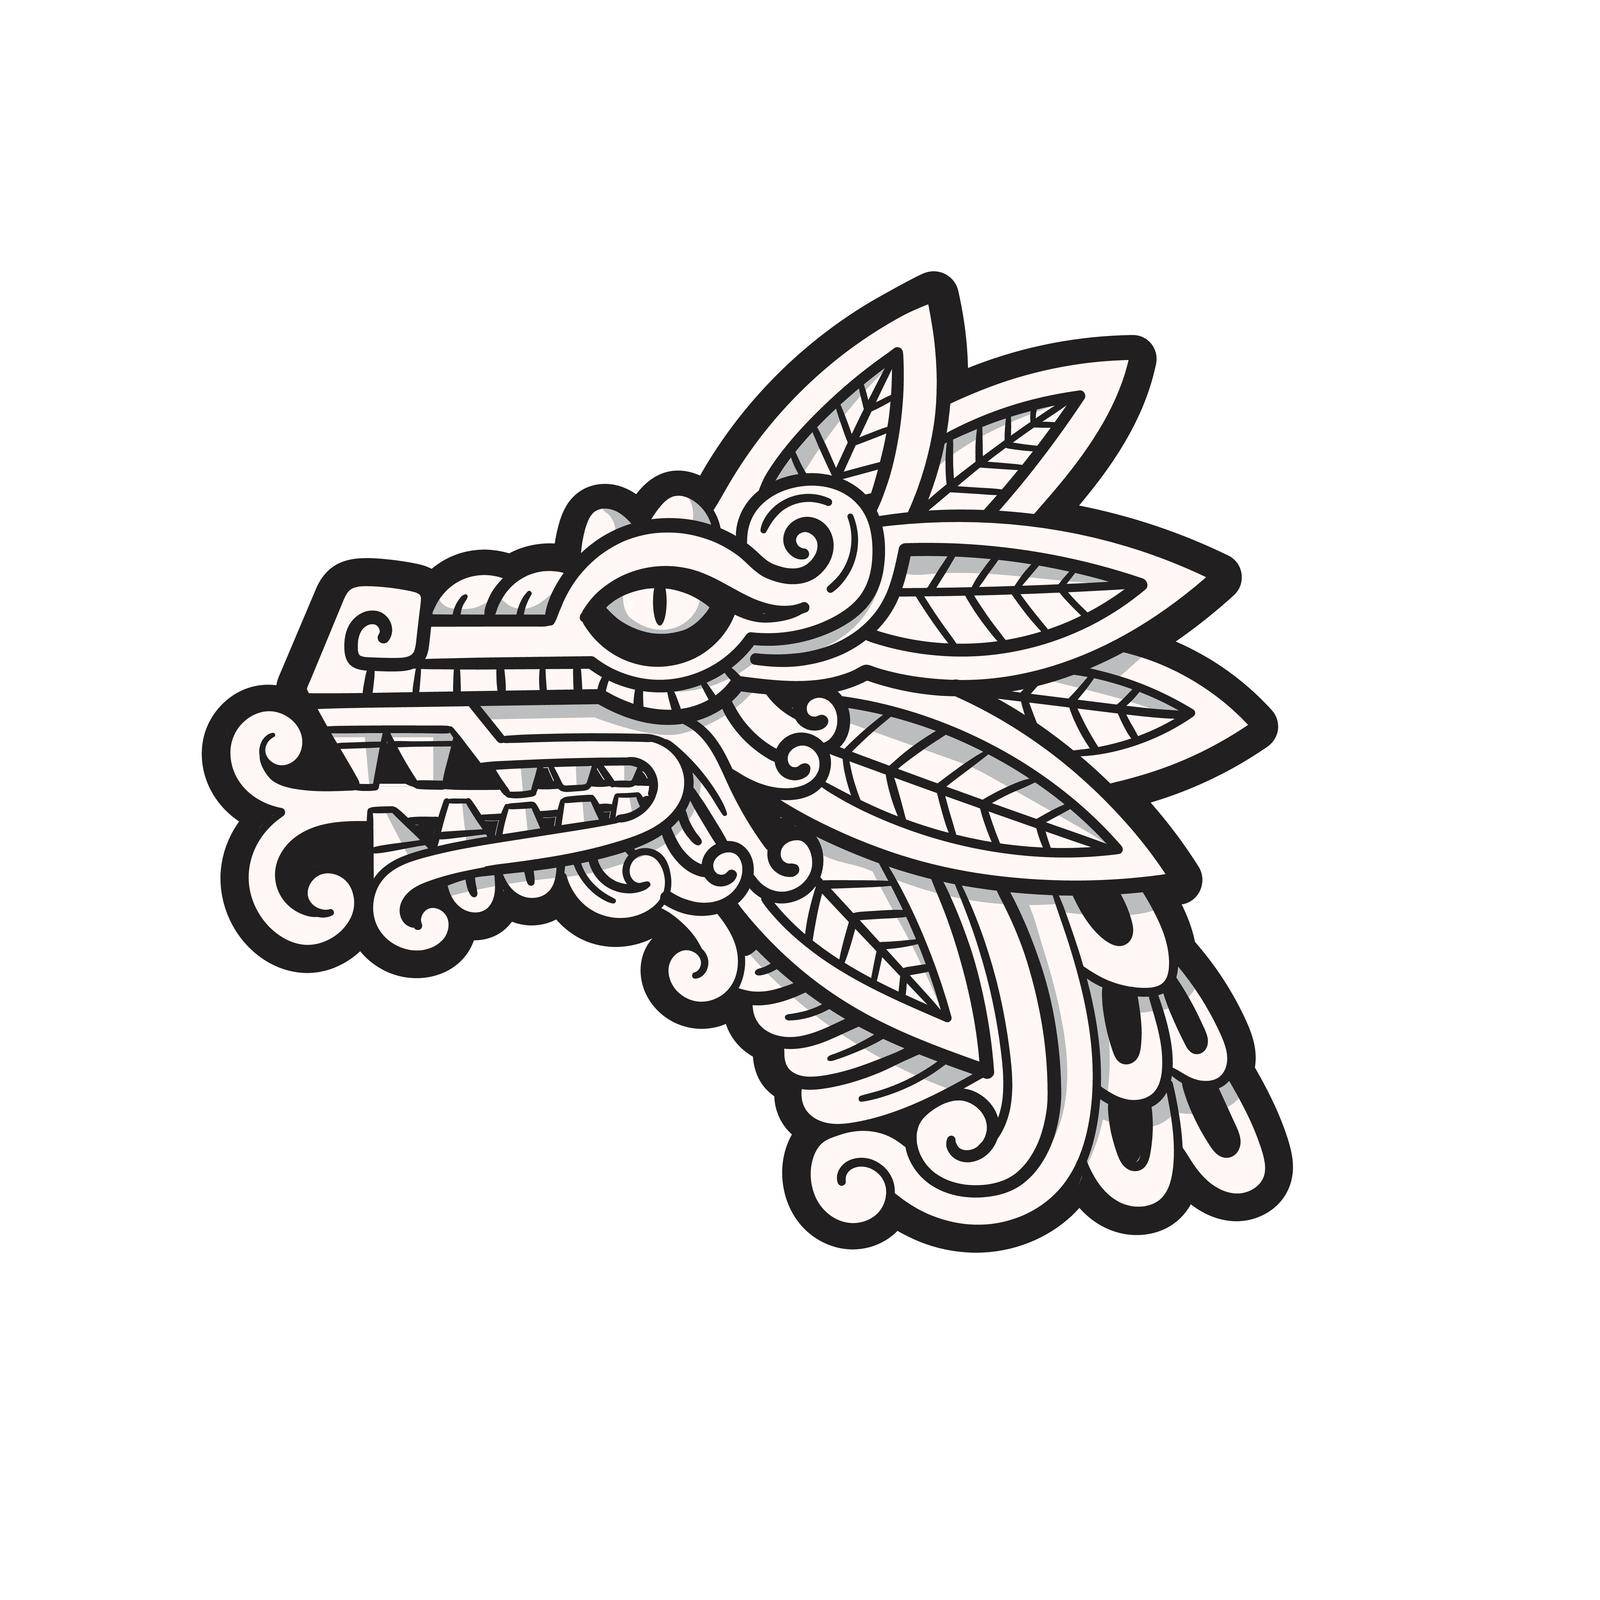 quetzalcoatl head mexican god aztec graphic, Native American animal design of Aztec Indians from Mexican codex